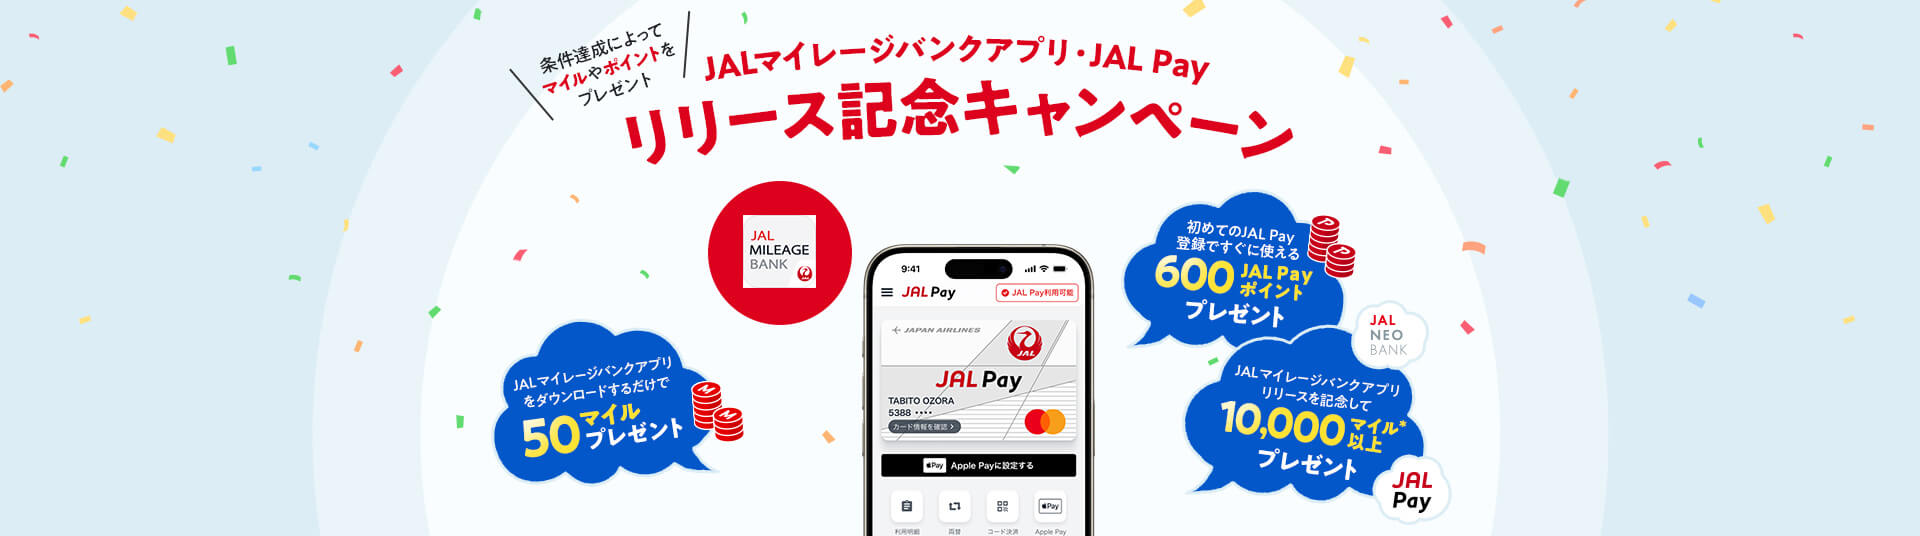 JALマイレージバンクアプリ・JAL Payリリース記念キャンペーン